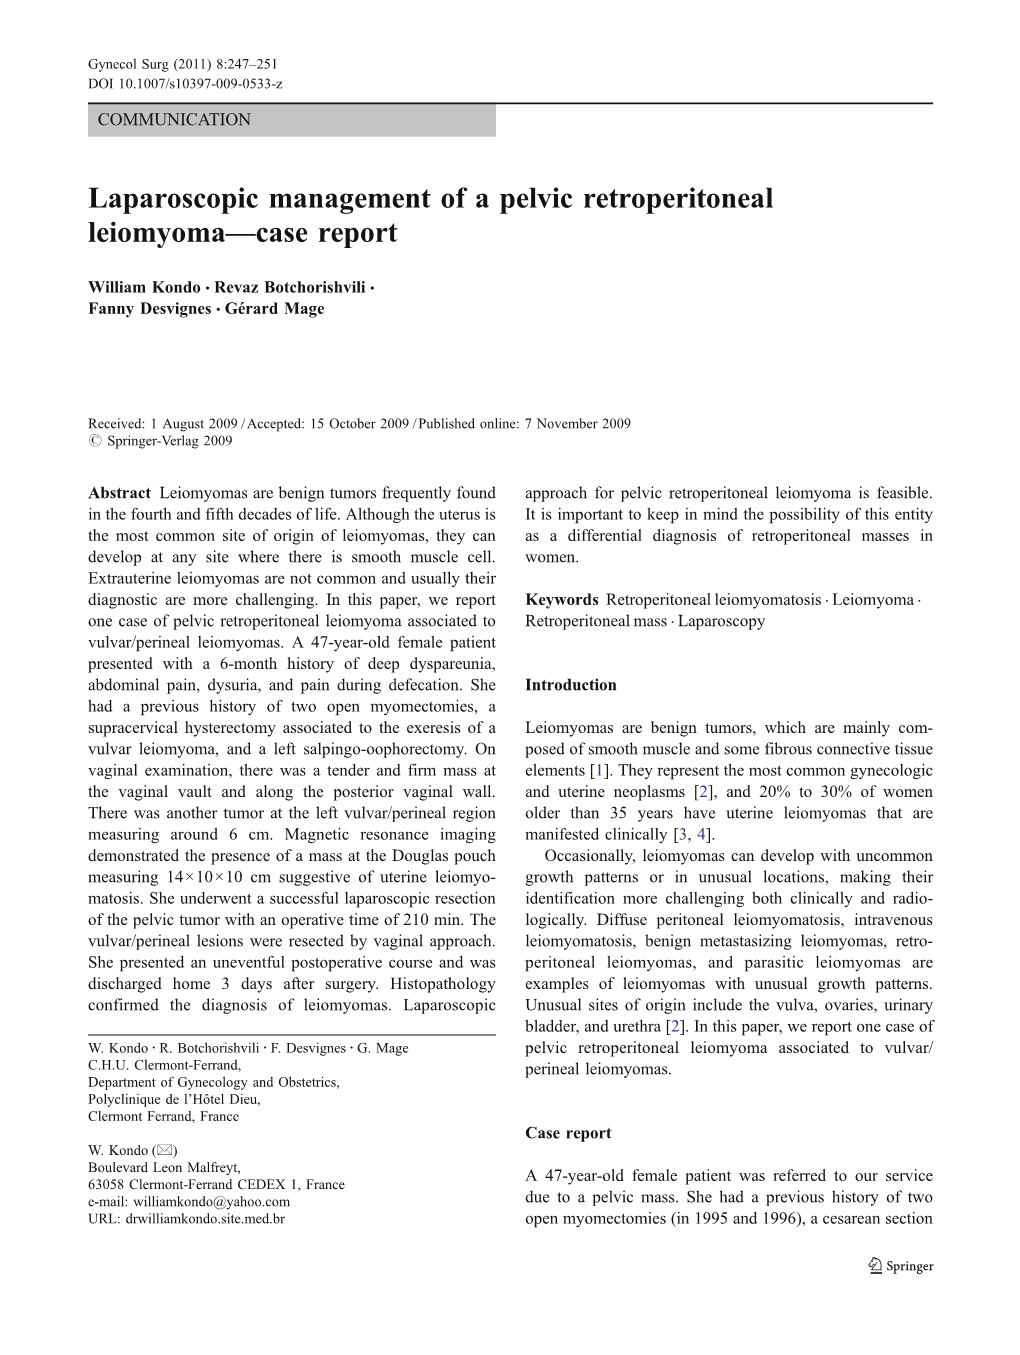 Laparoscopic Management of a Pelvic Retroperitoneal Leiomyoma—Case Report